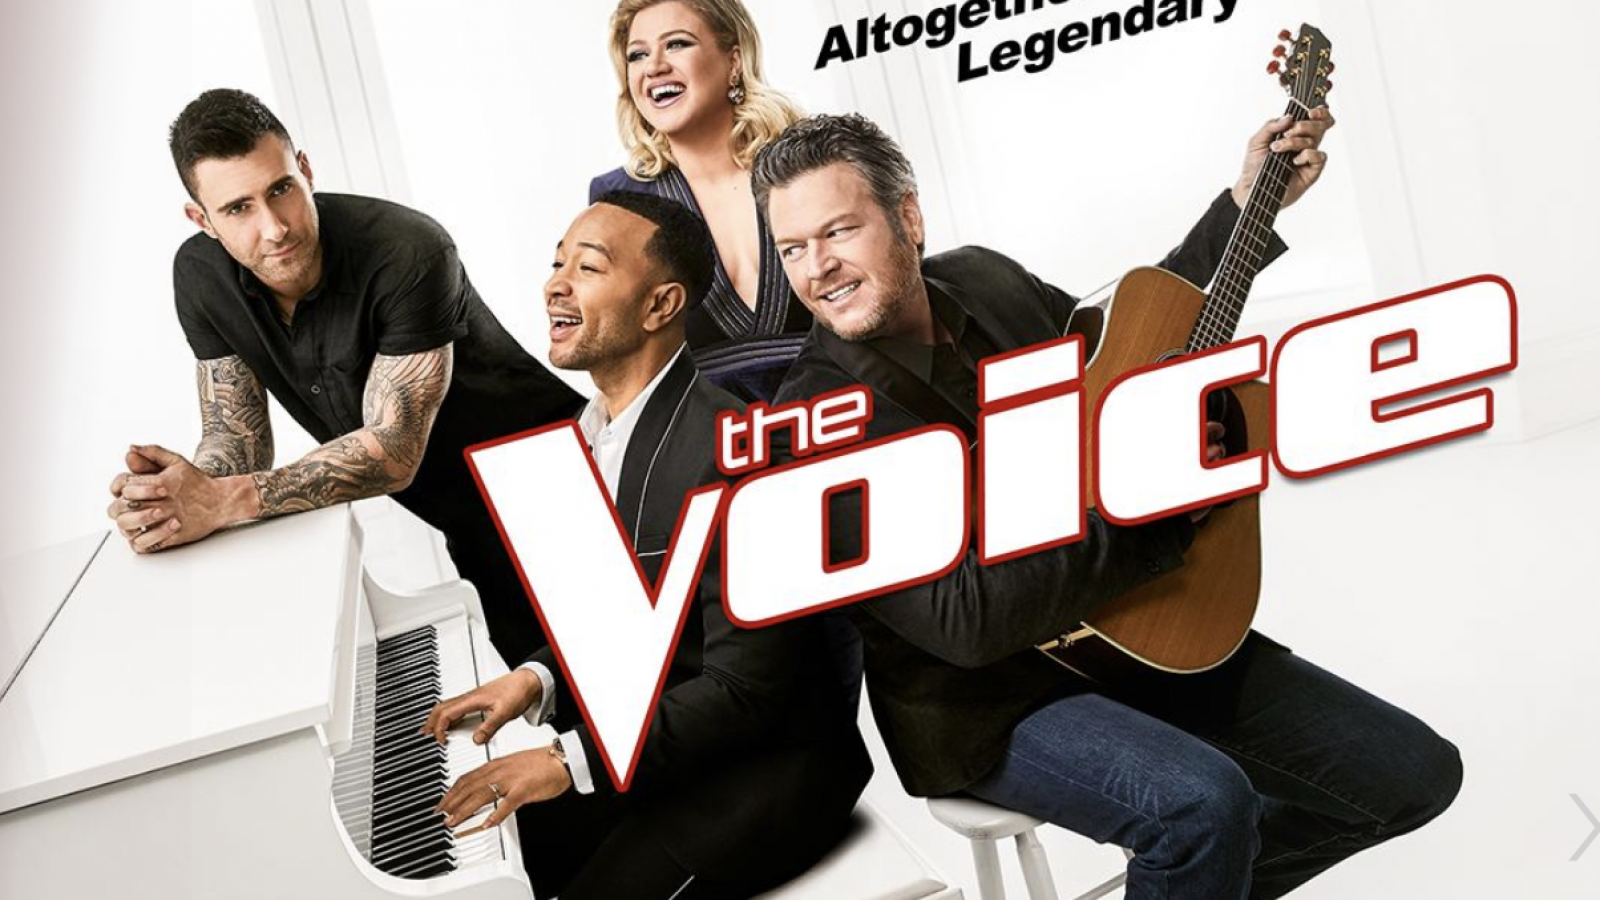 The Voice USA 2019. The Voice Magazine. Top voice